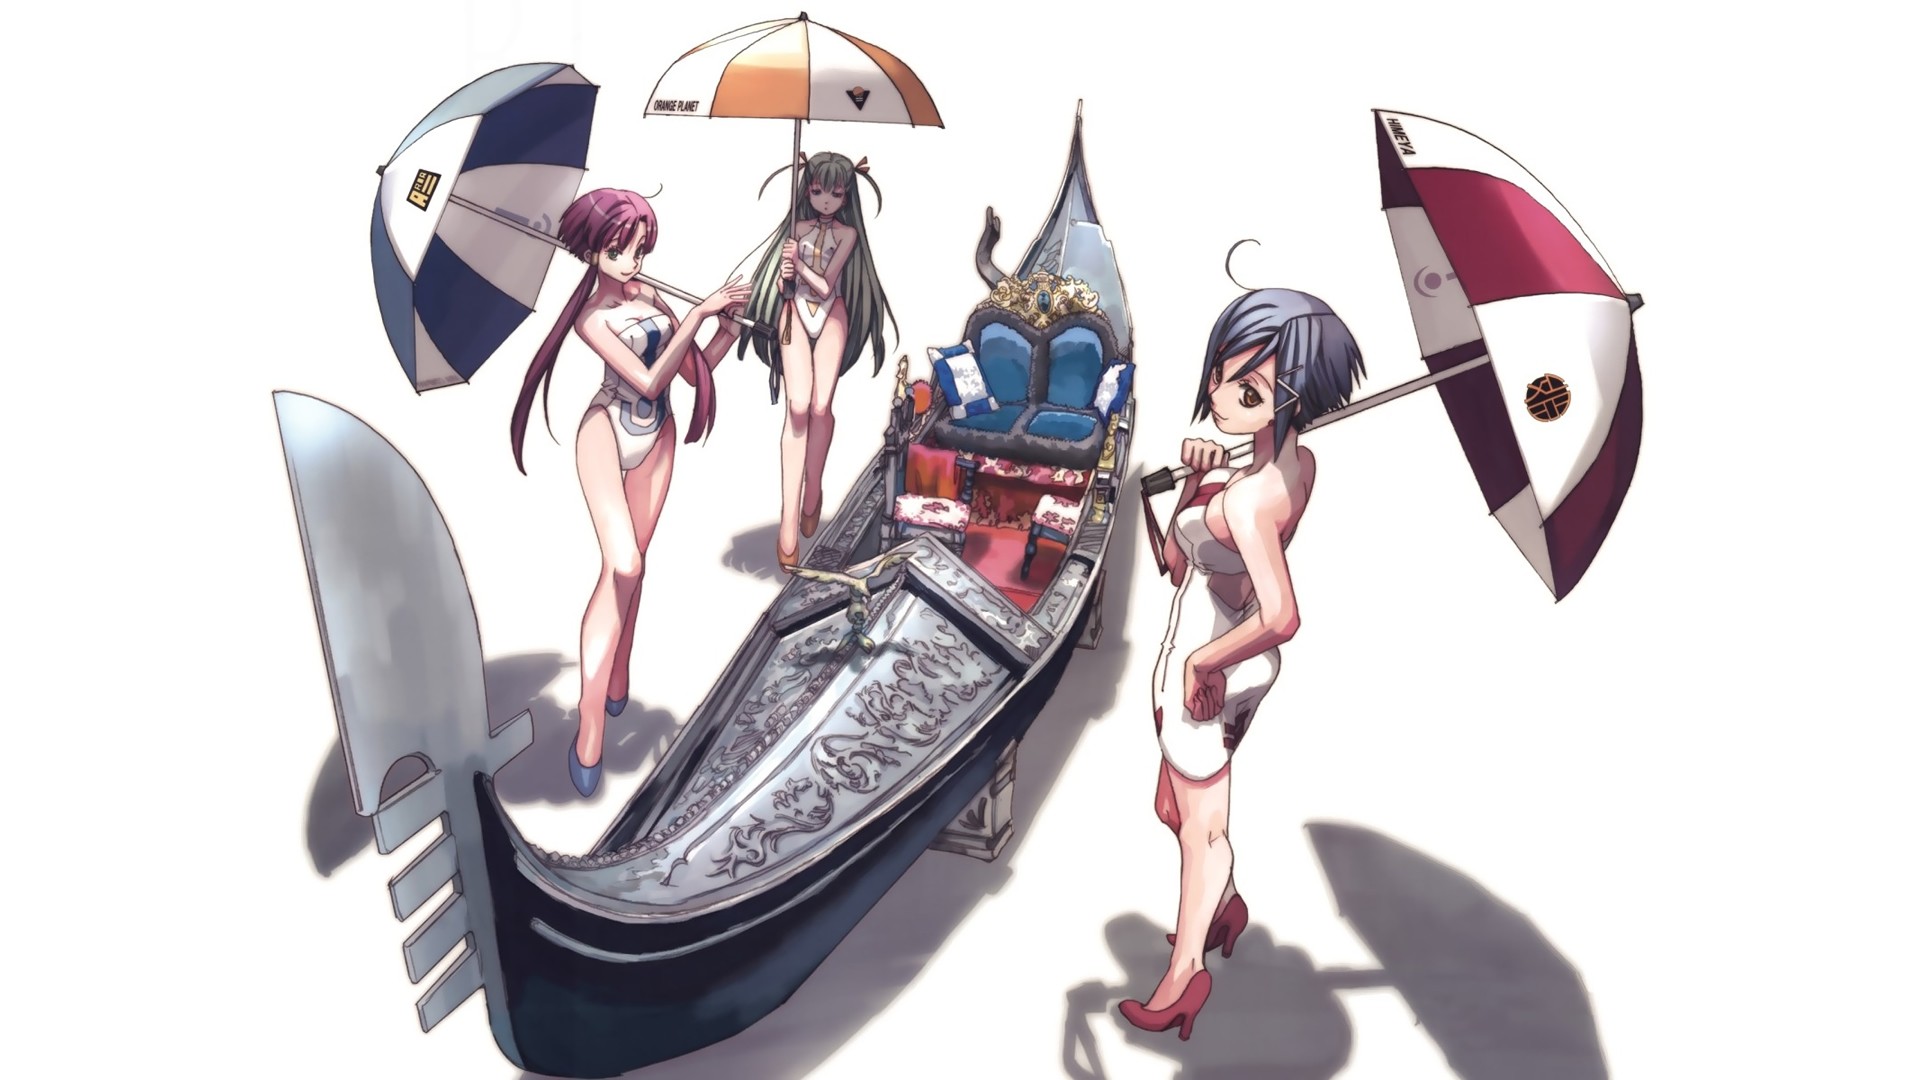 Anime 1920x1080 anime umbrella gondolas anime girls vehicle standing women women trio simple background white background dark hair heels